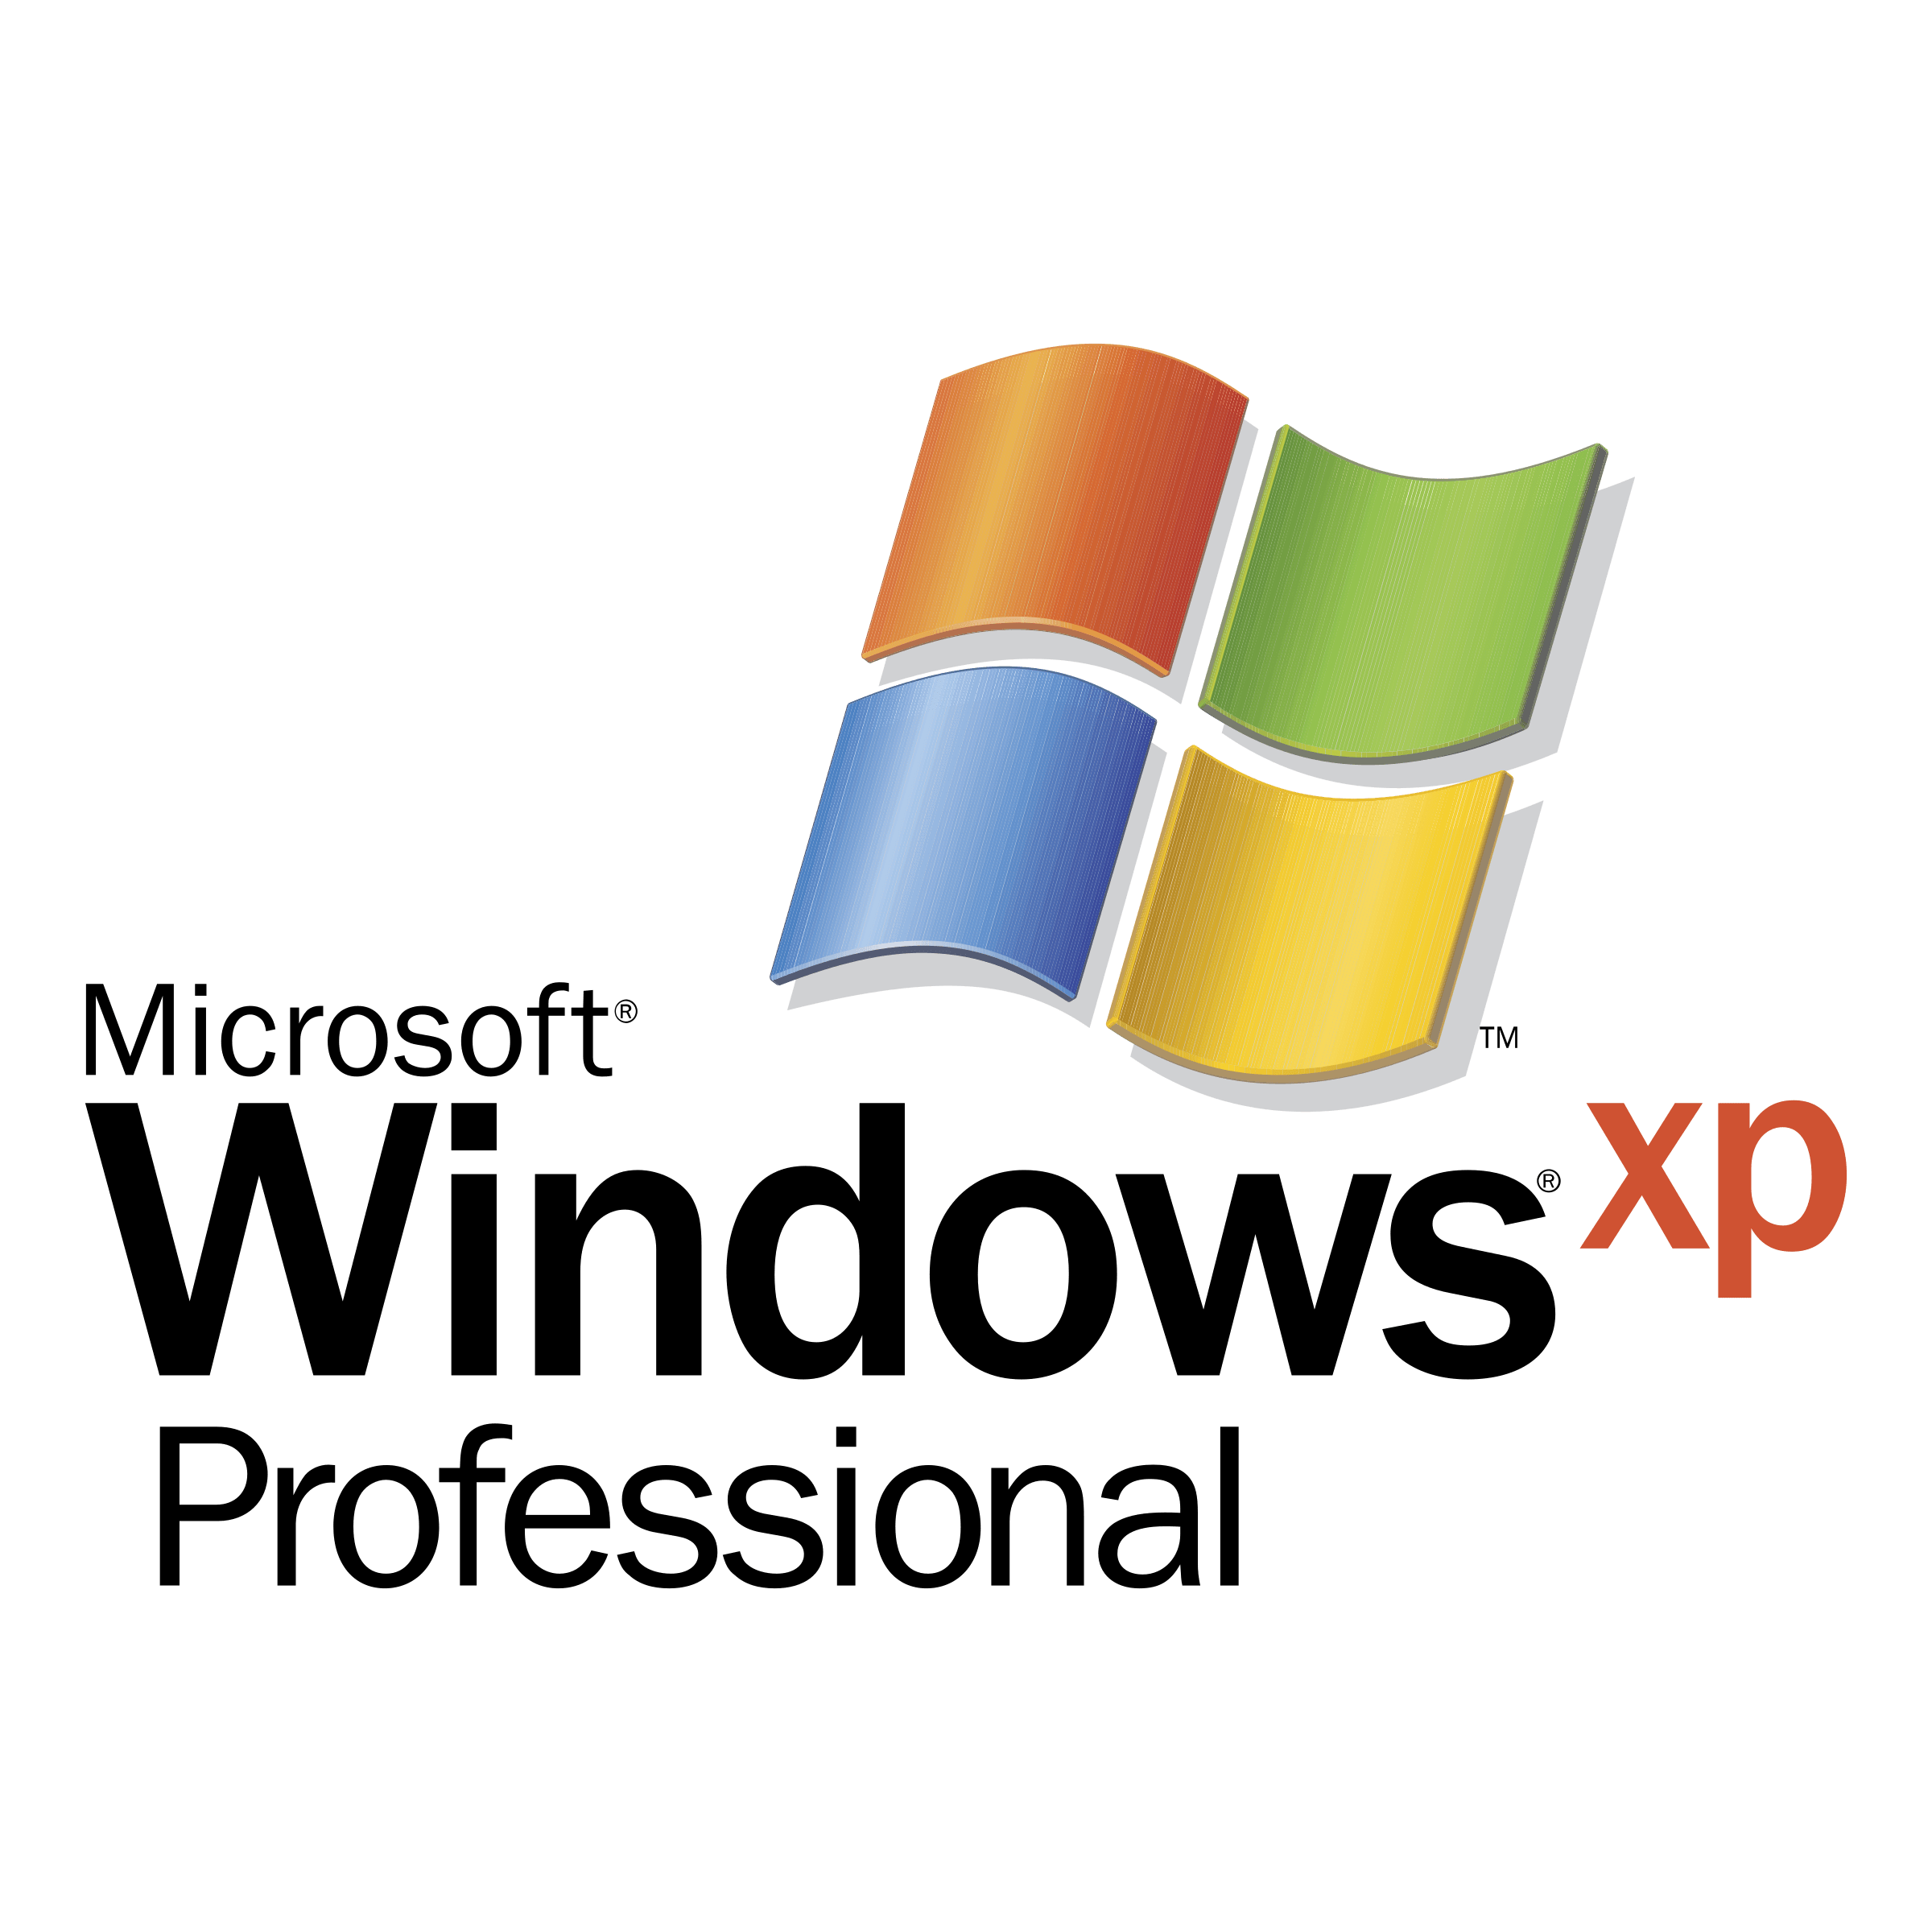 Microsoft Windows XP Professional Logo - Microsoft Windows XP Professional Logo PNG Transparent & SVG Vector ...